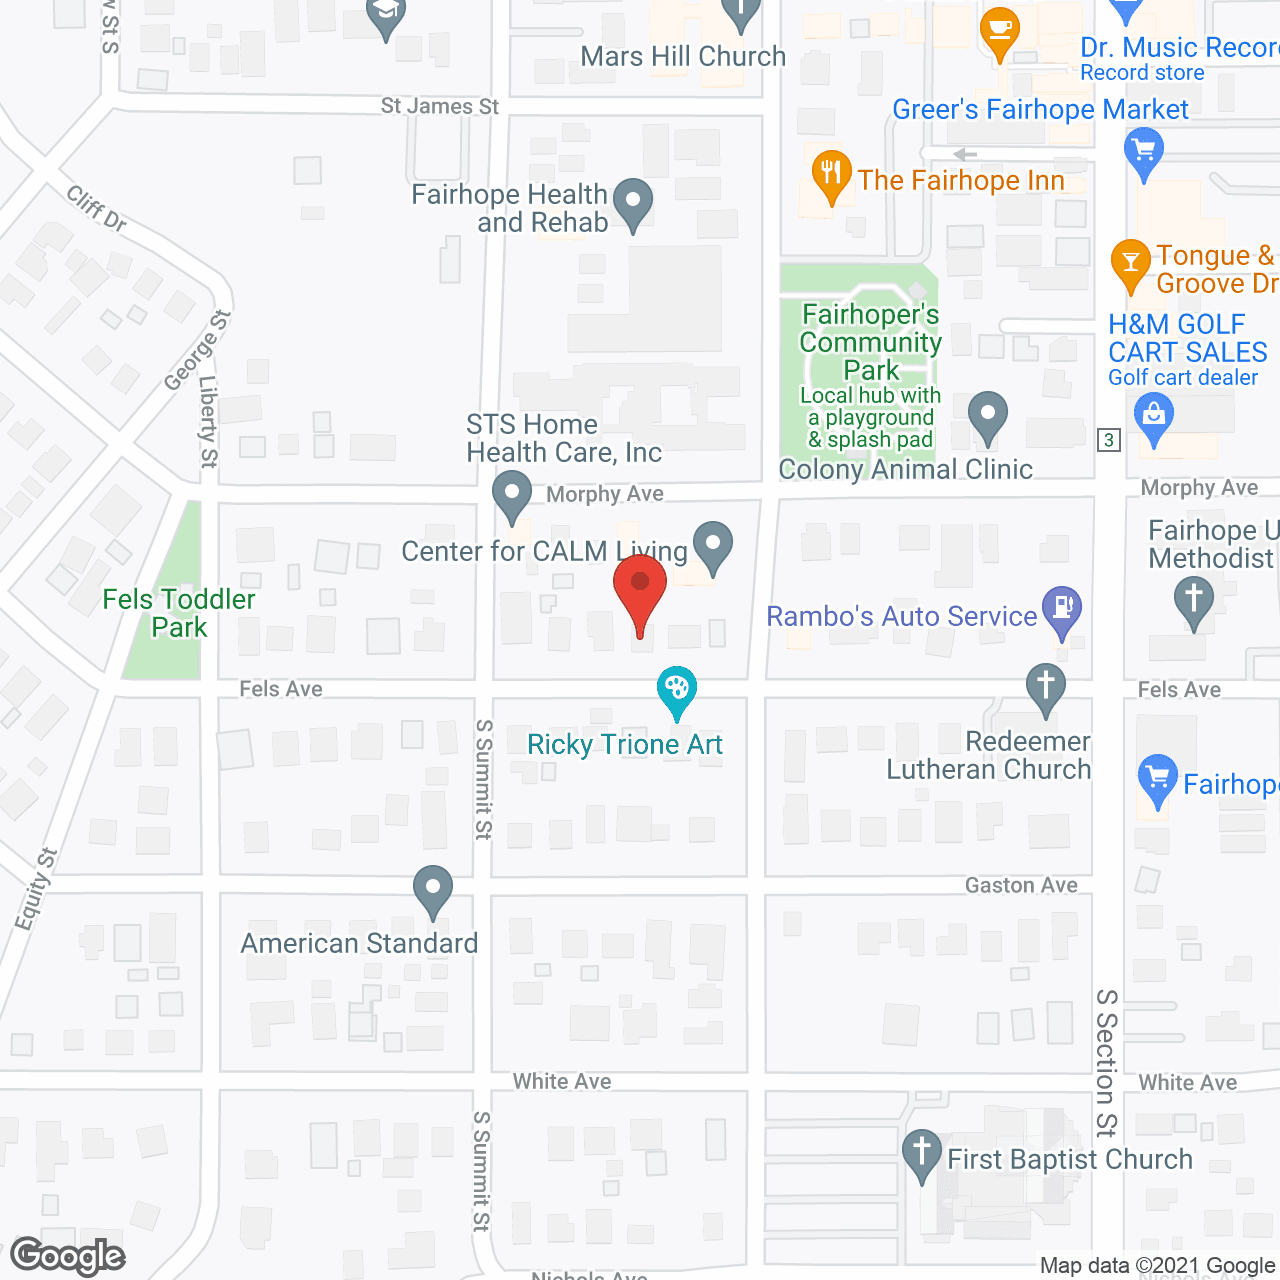 DDJ LLC in google map